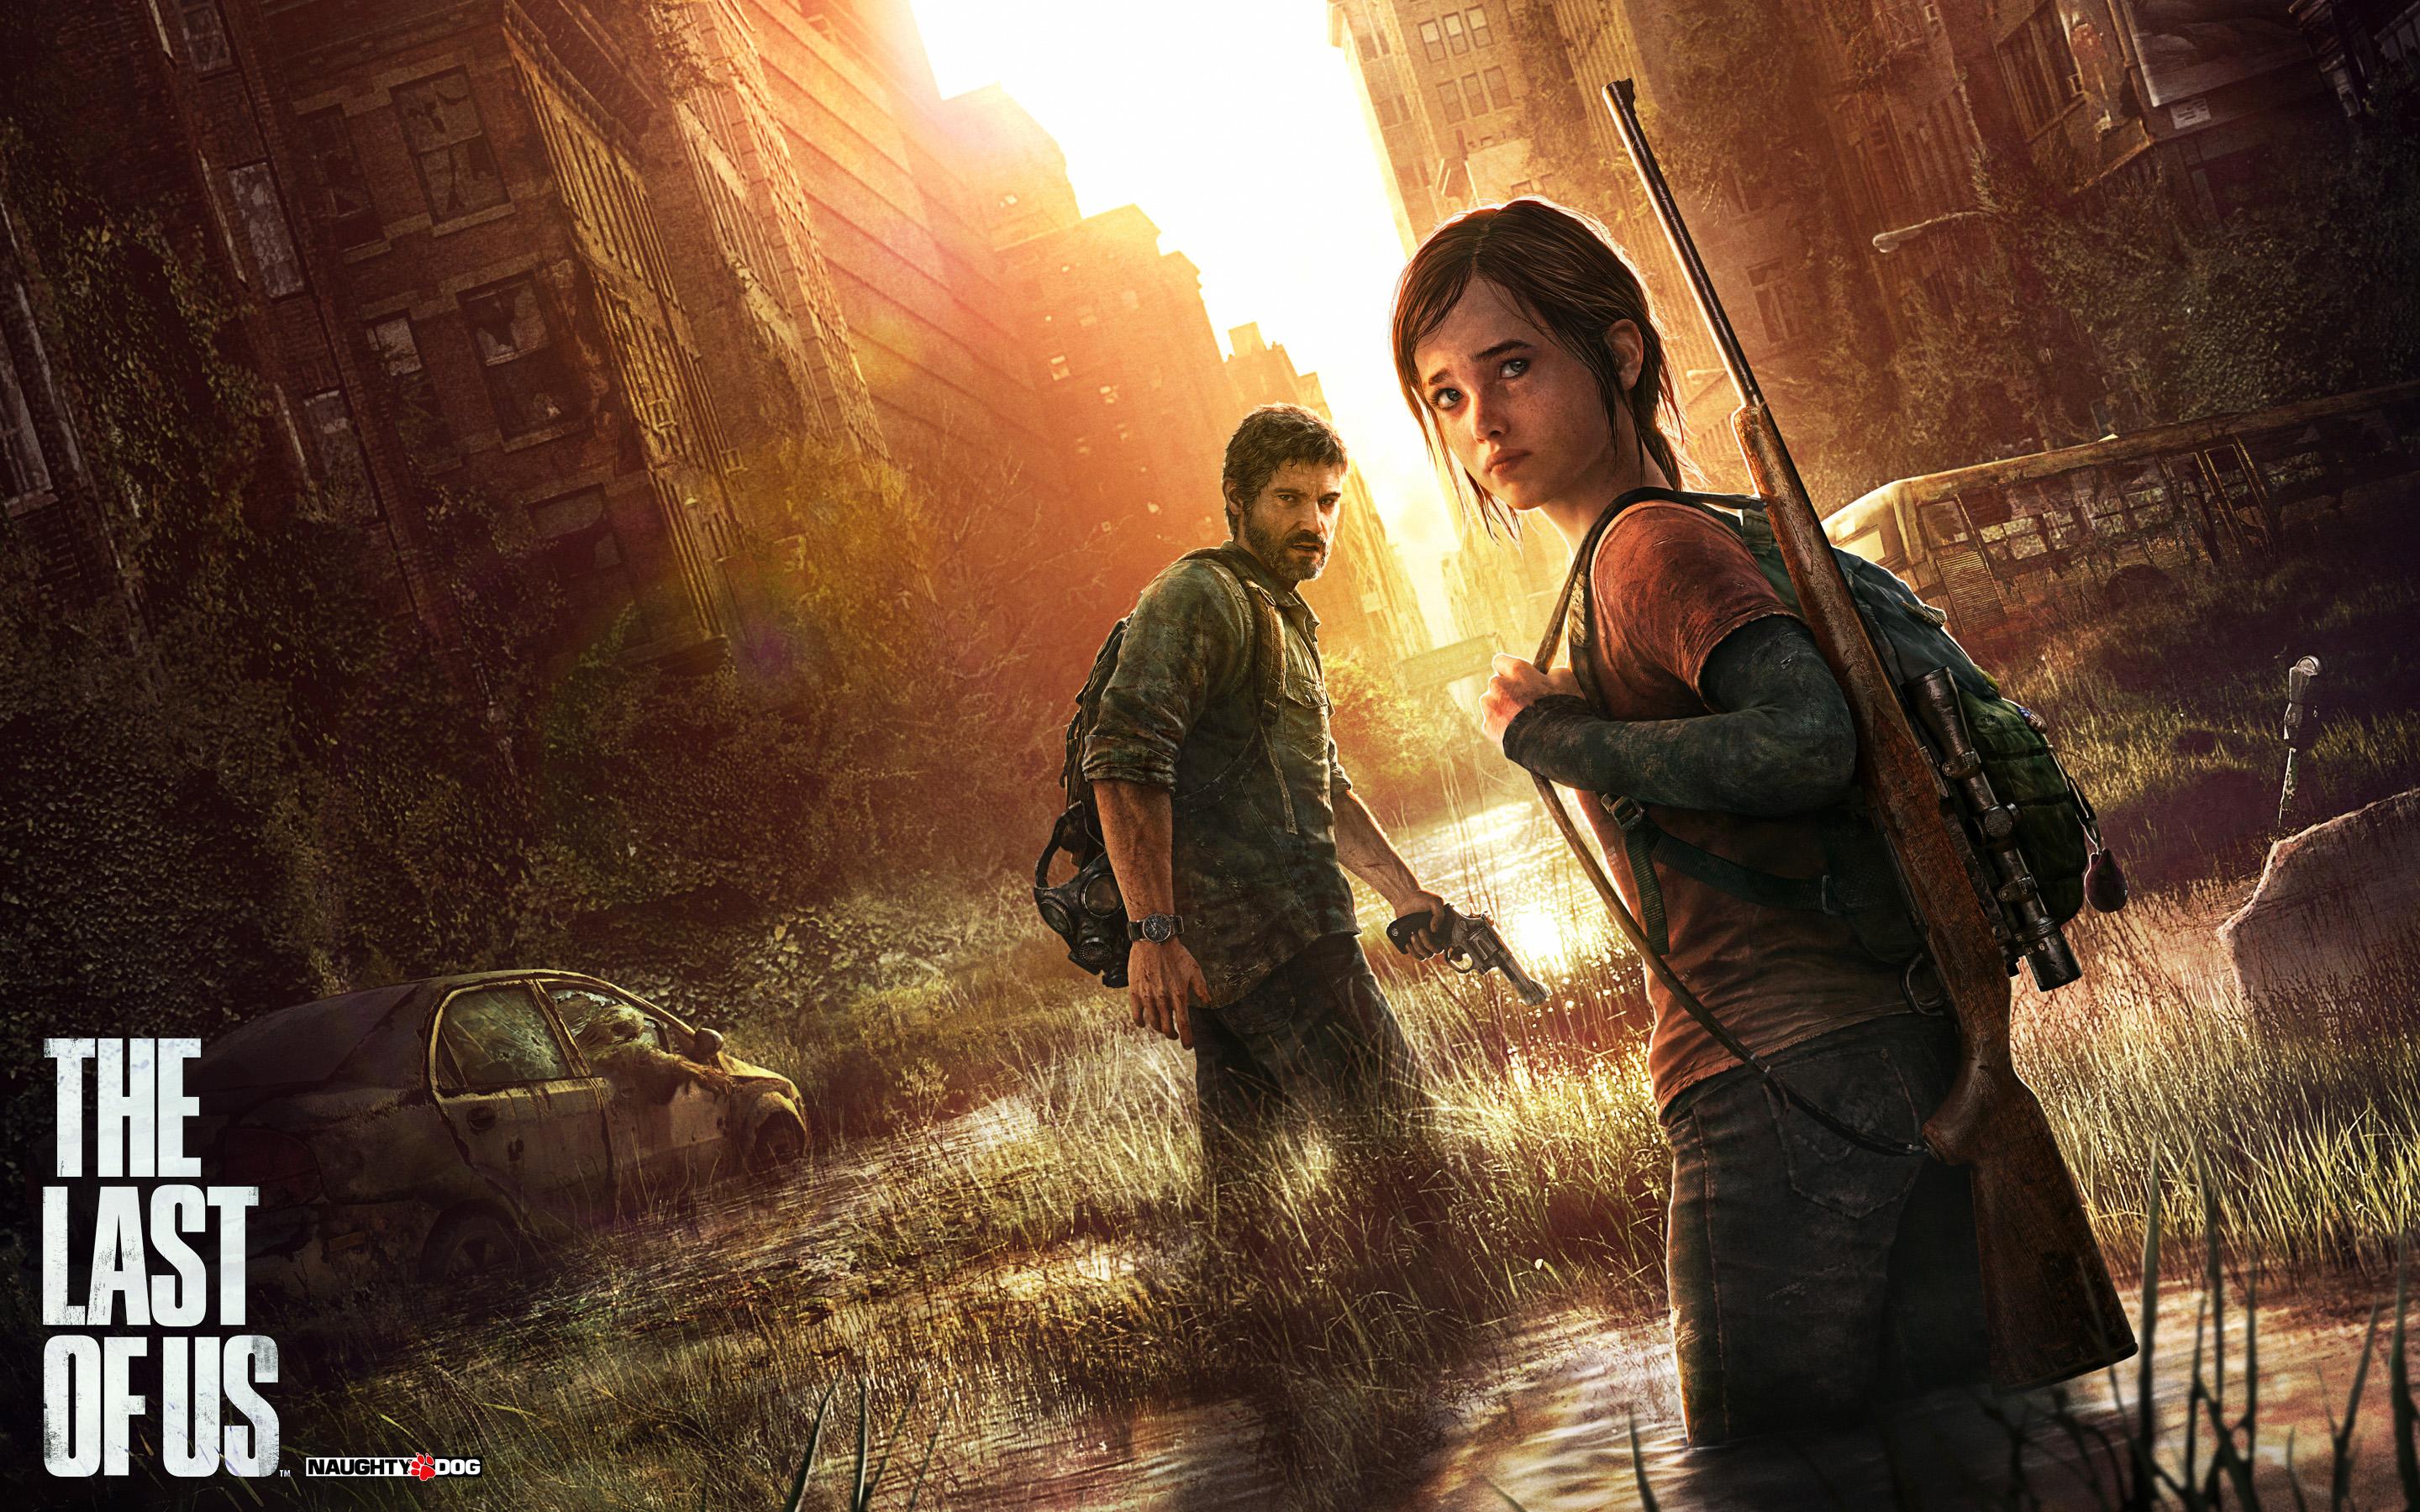 Trilha sonora de The Last of Us será lançada em vinil